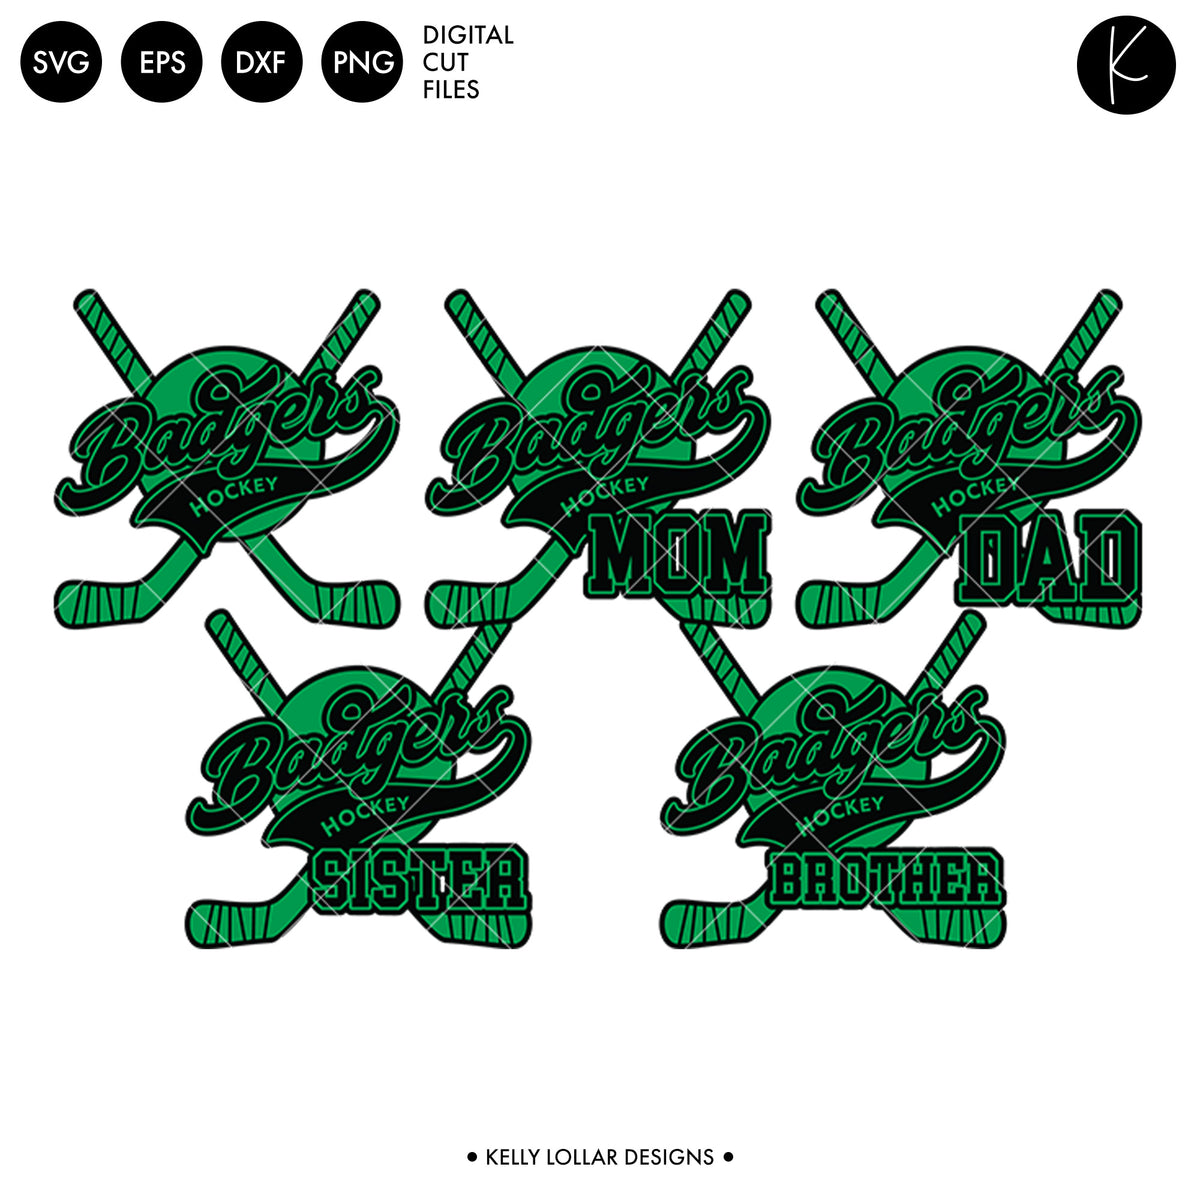 Badgers Hockey Bundle | SVG DXF EPS PNG Cut Files